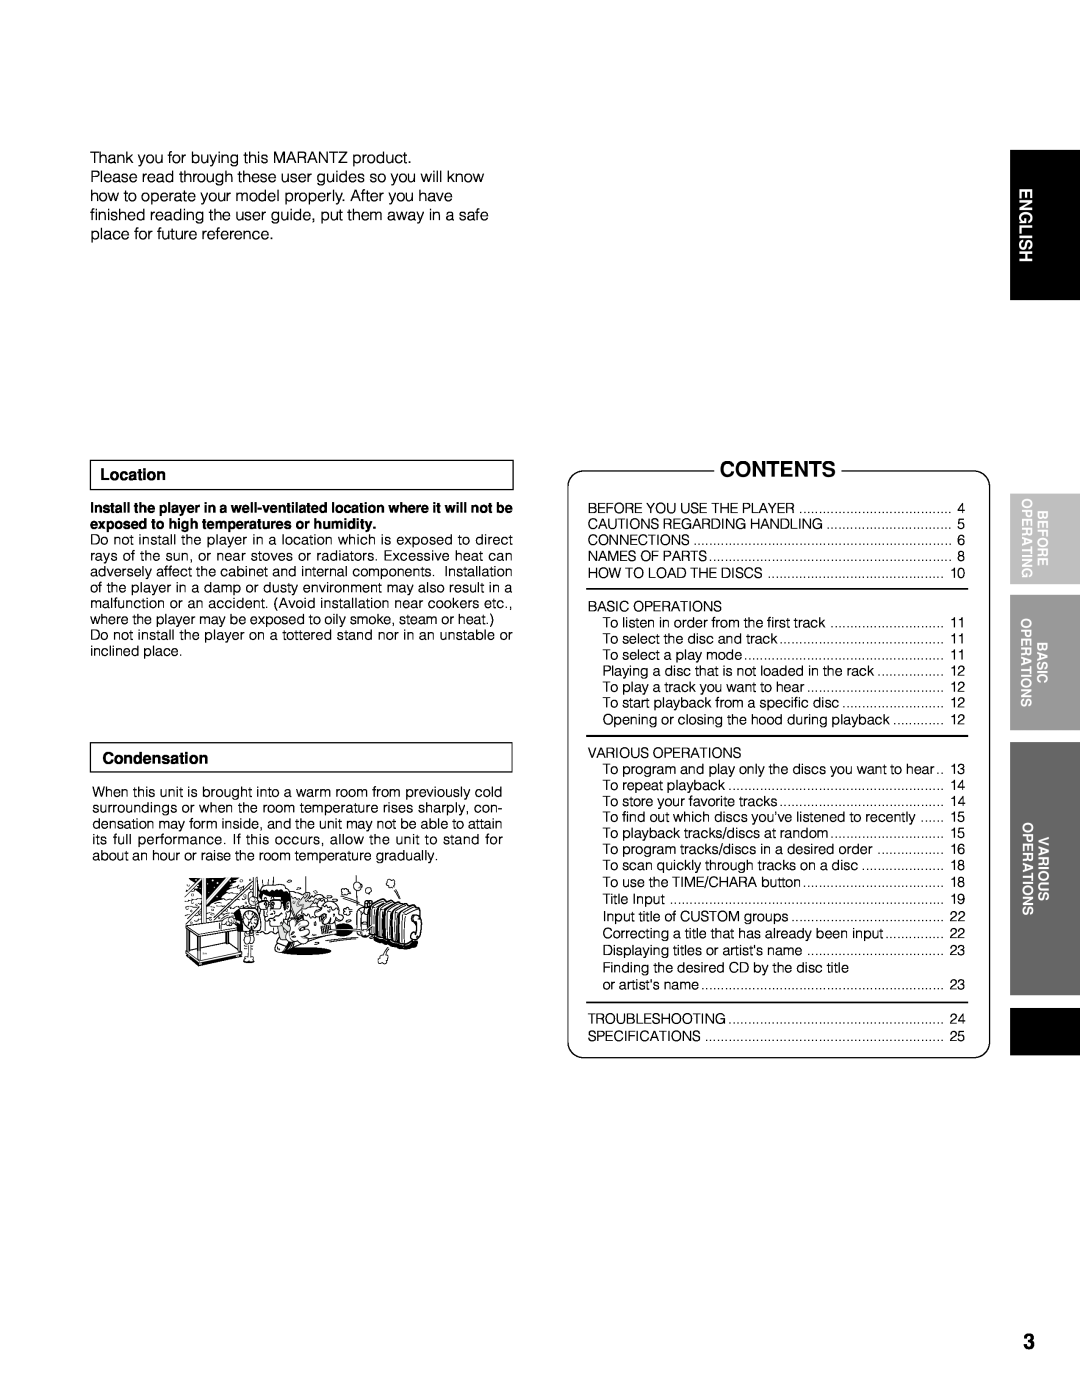 Marantz CC9100 manual Contents, English, Location, Condensation 